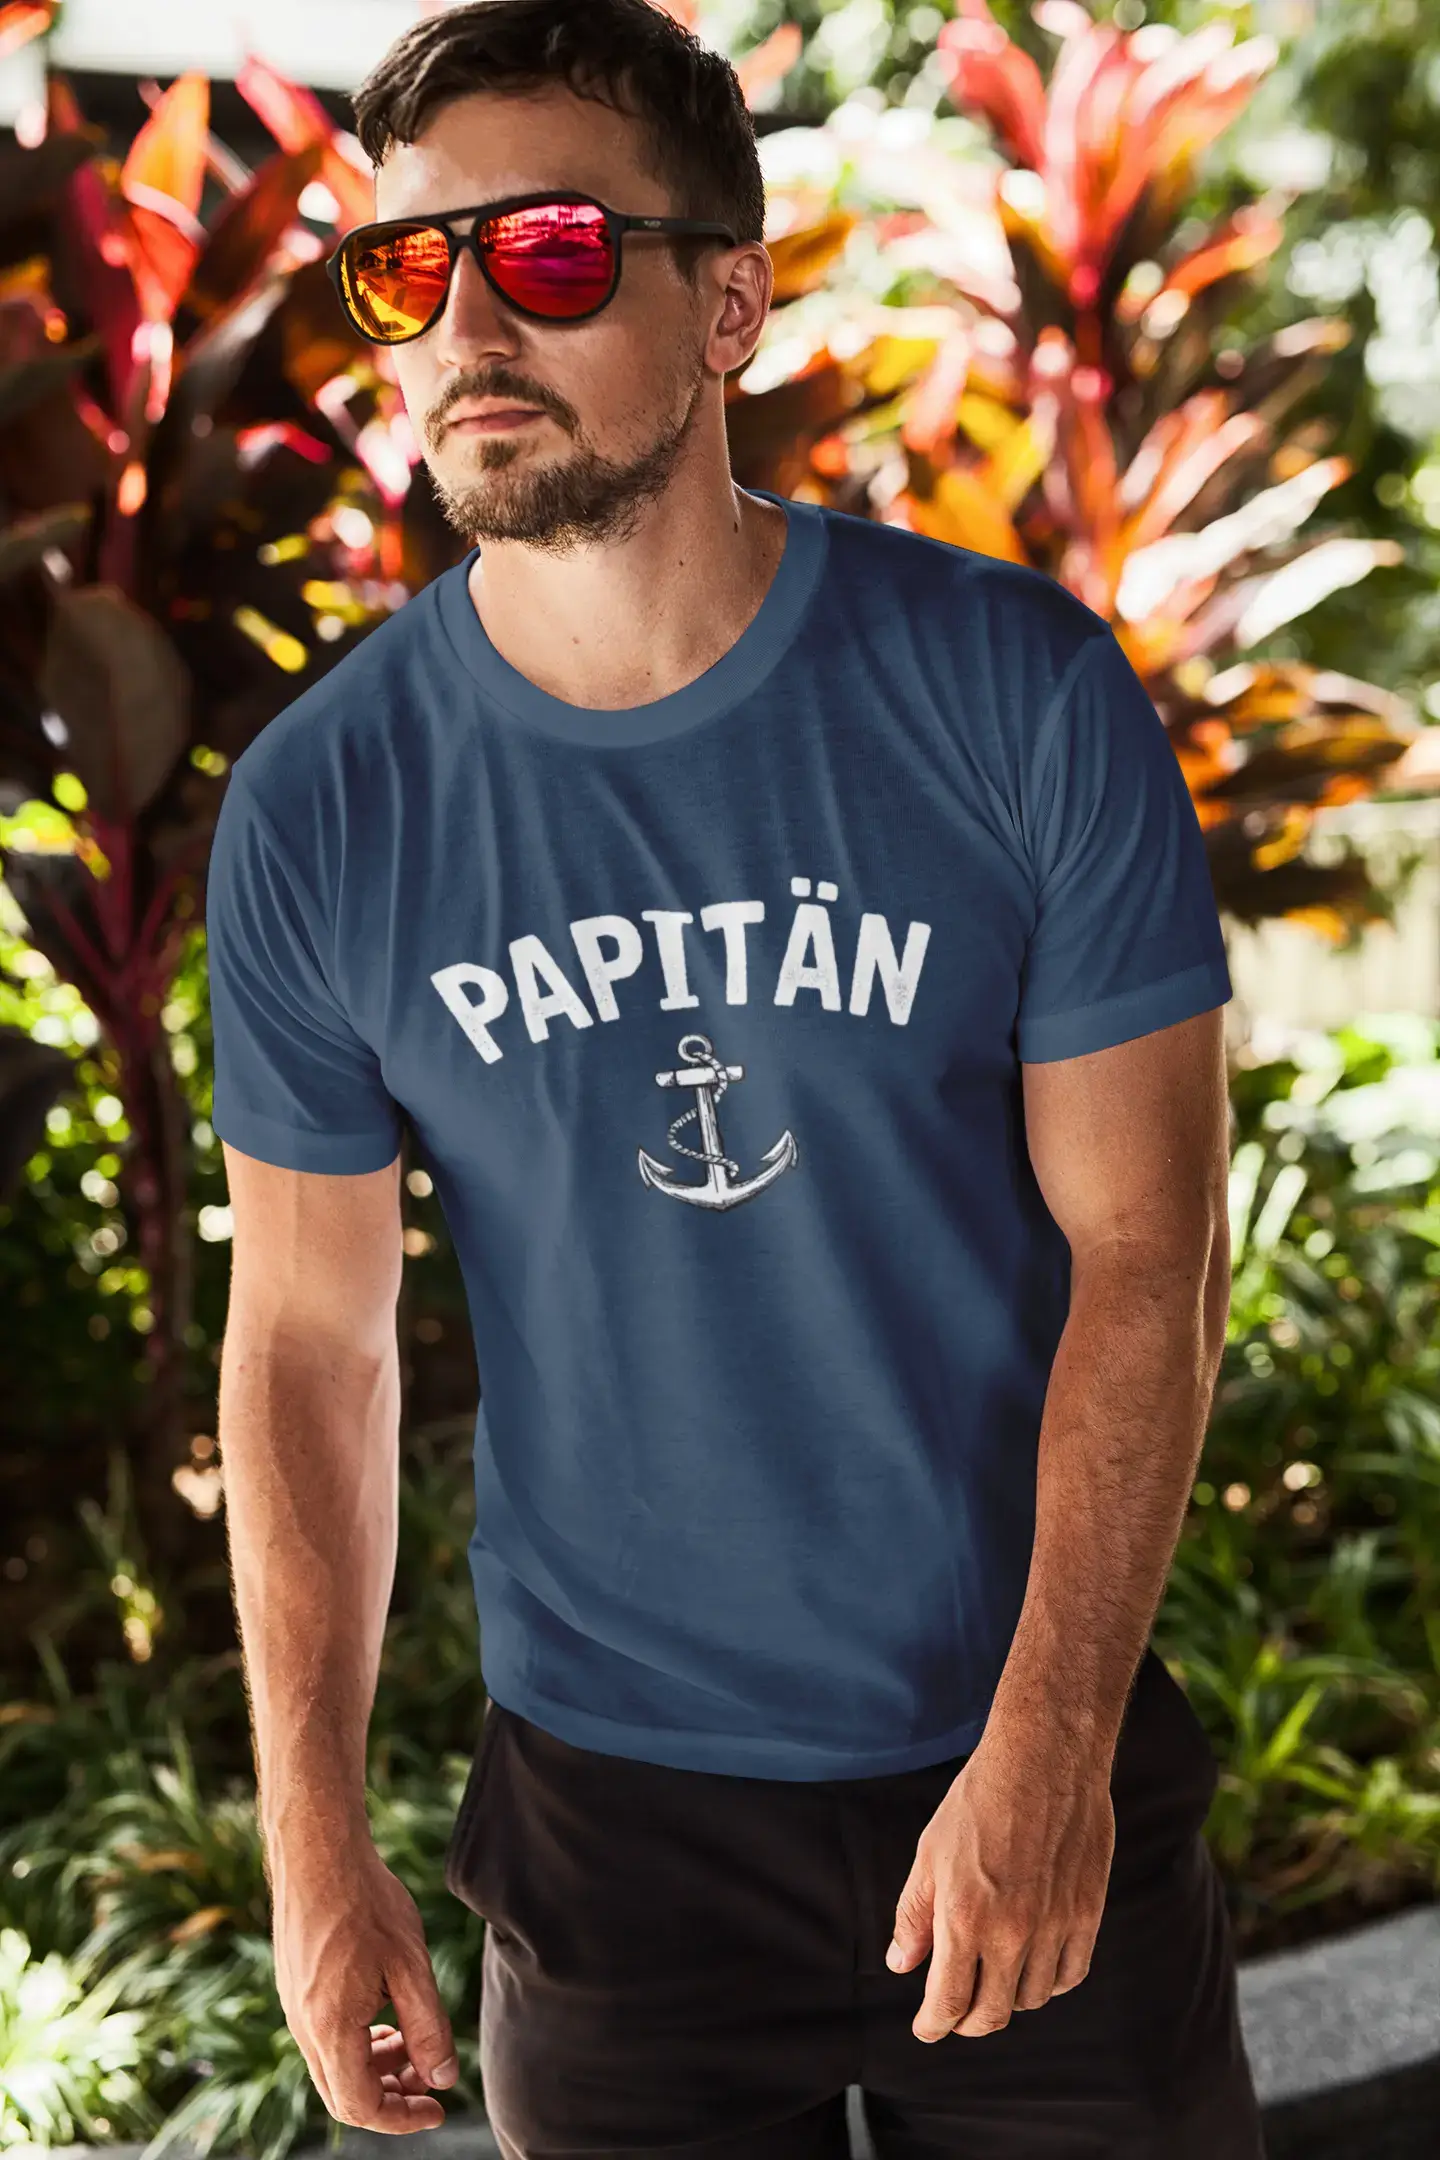 T-shirt <span>graphique</span> <span>homme</span> Papitän Anker idée <span>cadeau</span>